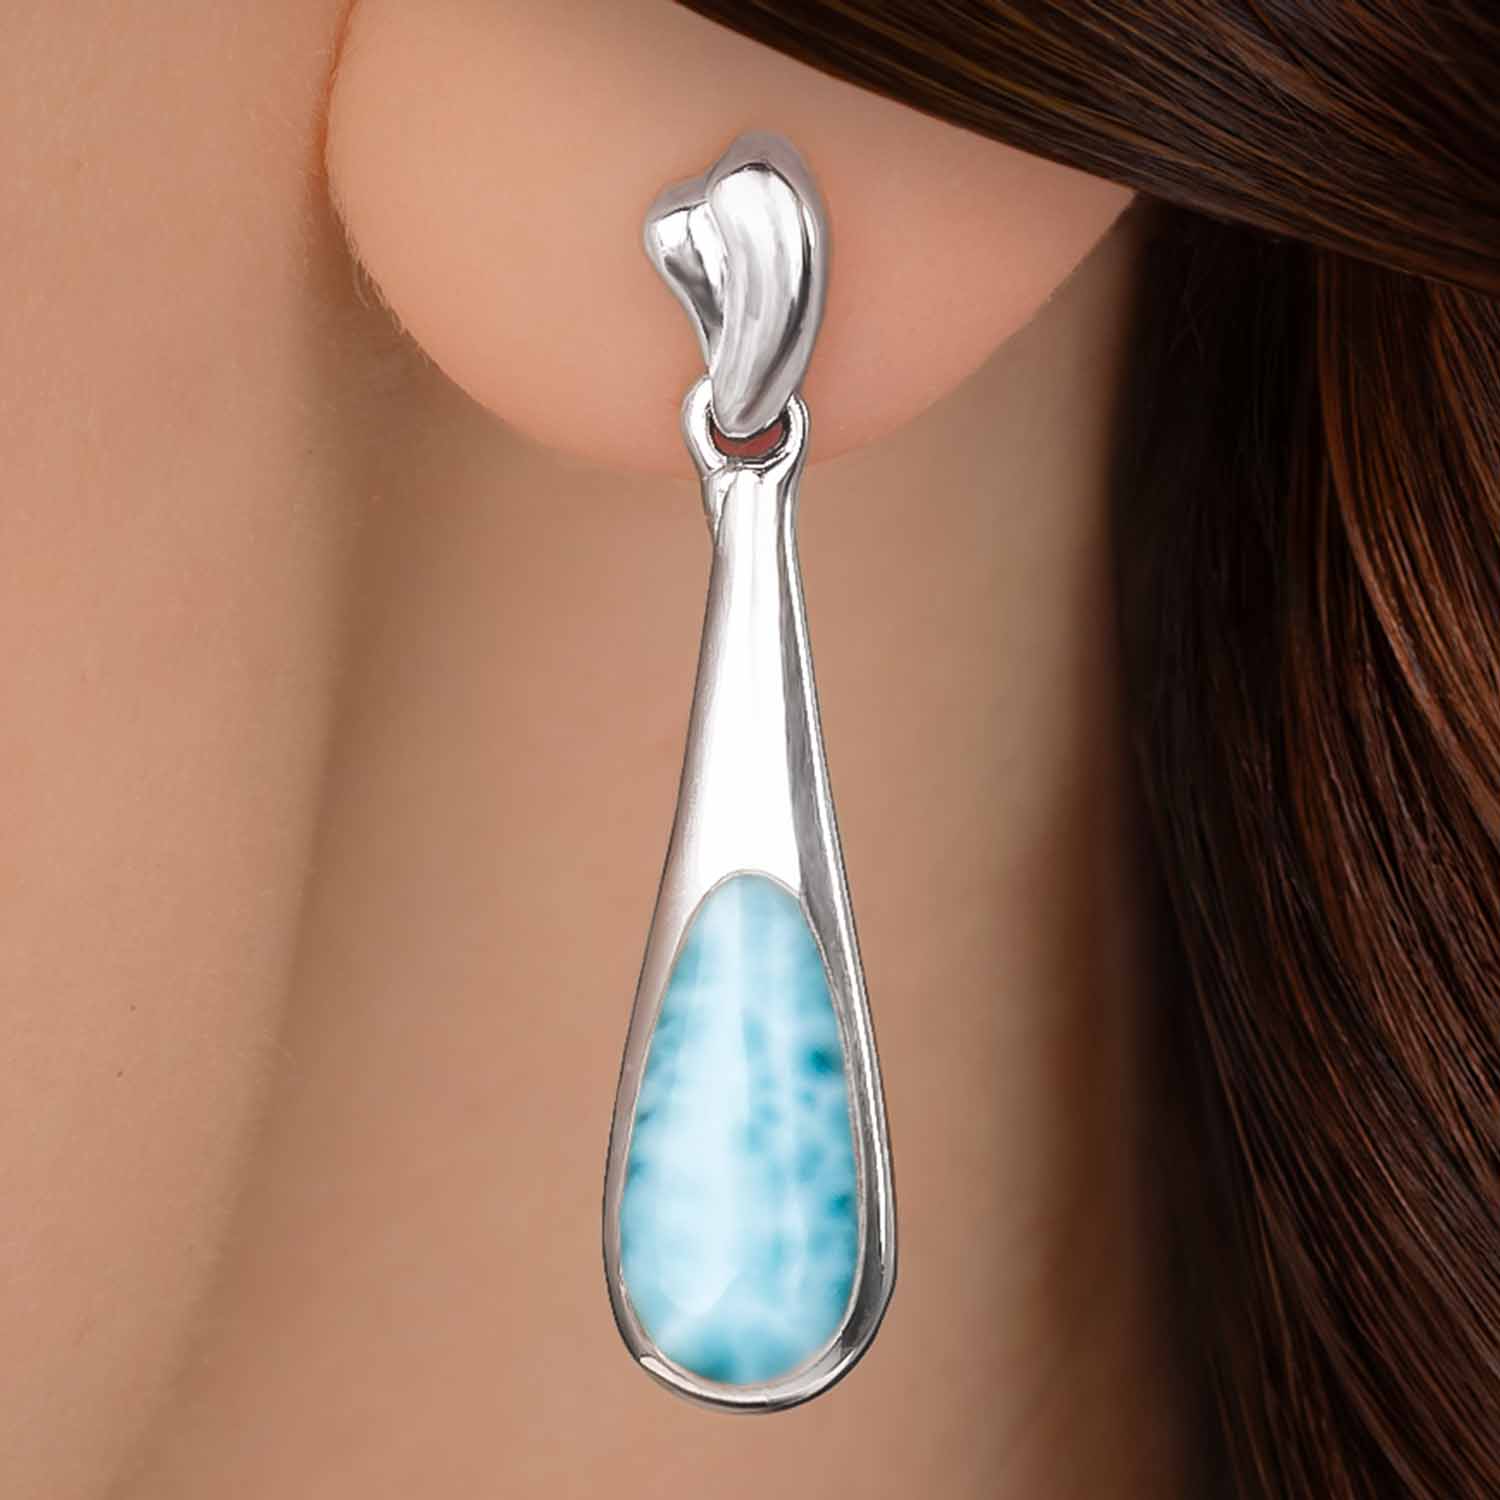 Indra silver larimar earrings marahlago